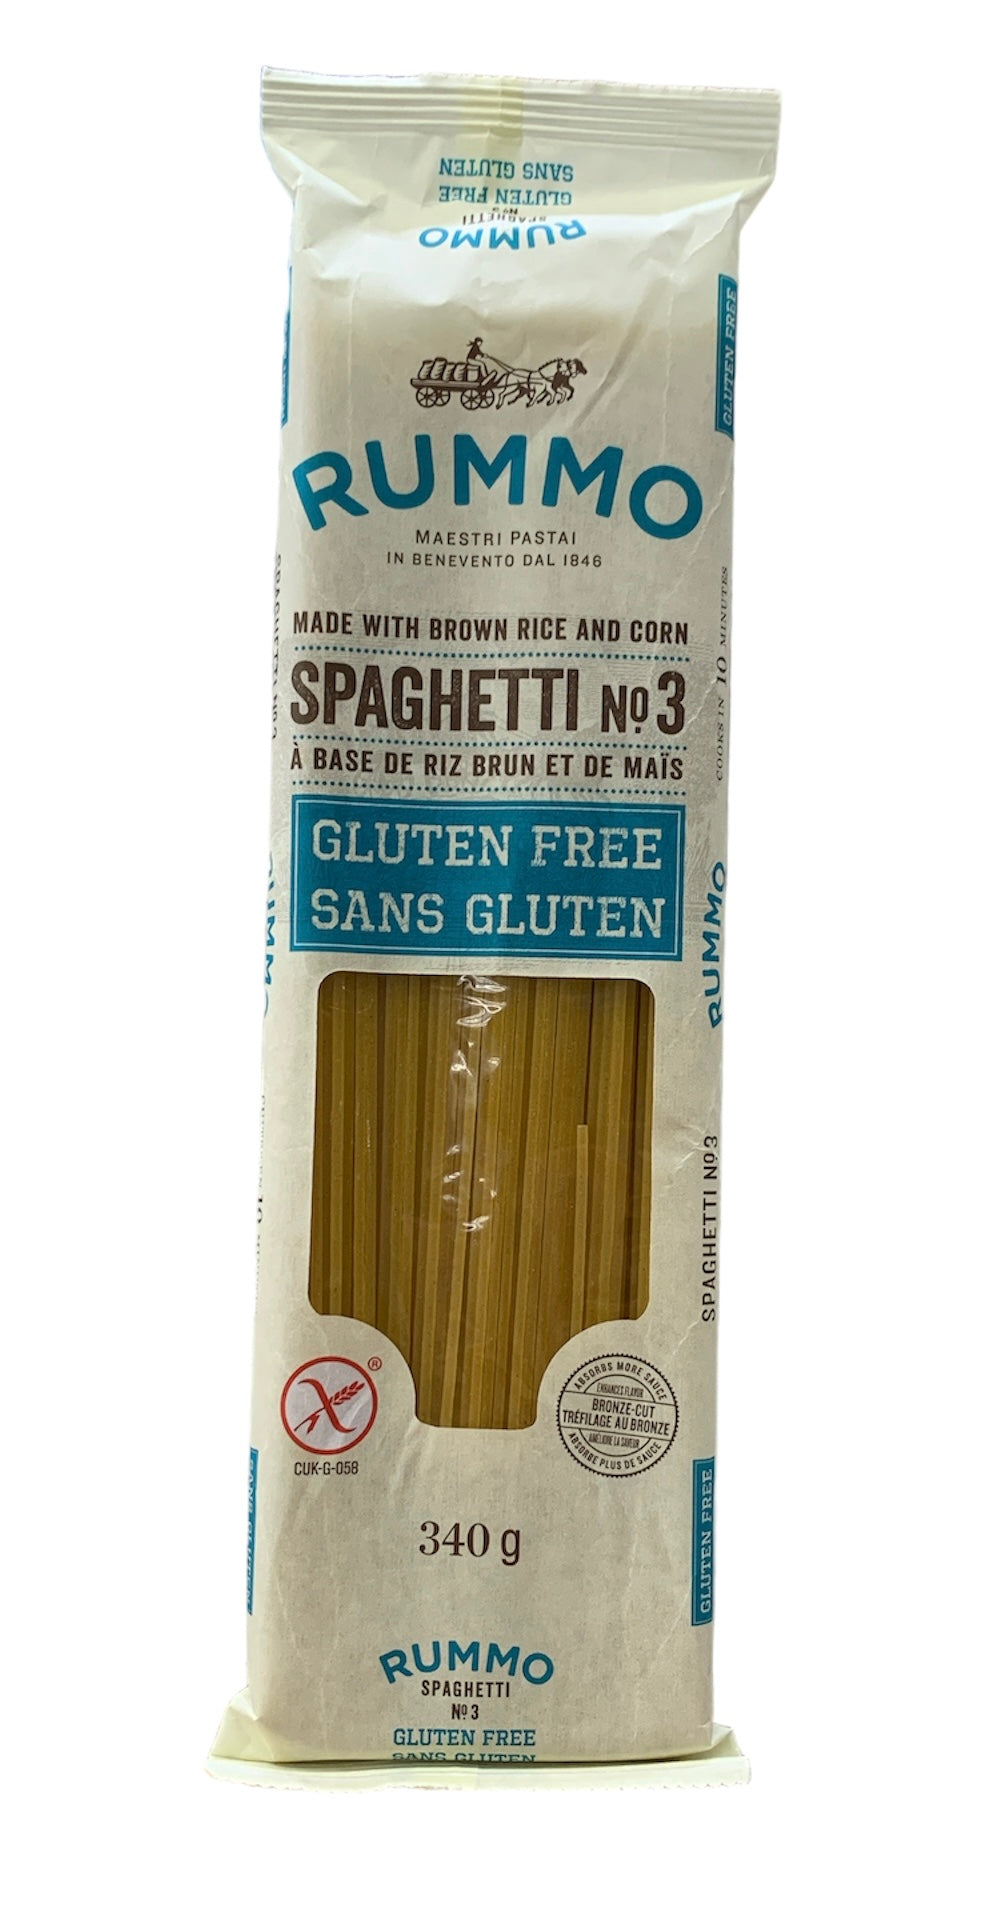 Gluten-free spaghetti 340g